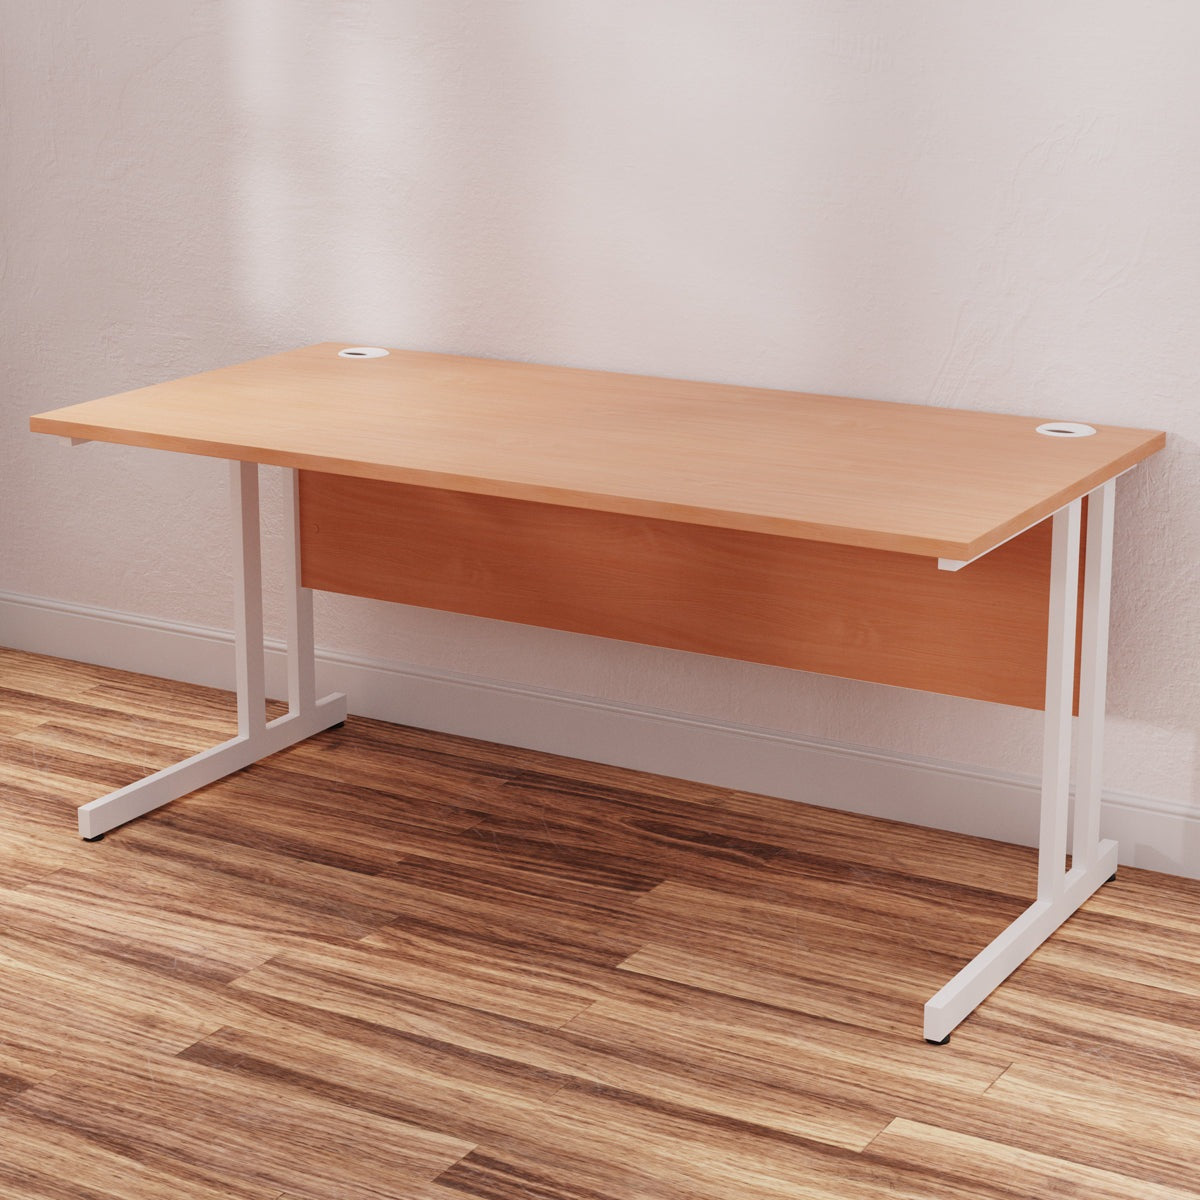 Impulse 1600mm Straight Desk Cantilever Leg - Rectangular MFC Table, 1600x800 Top, Silver/White/Black Frame, Self-Assembly, 5-Year Guarantee